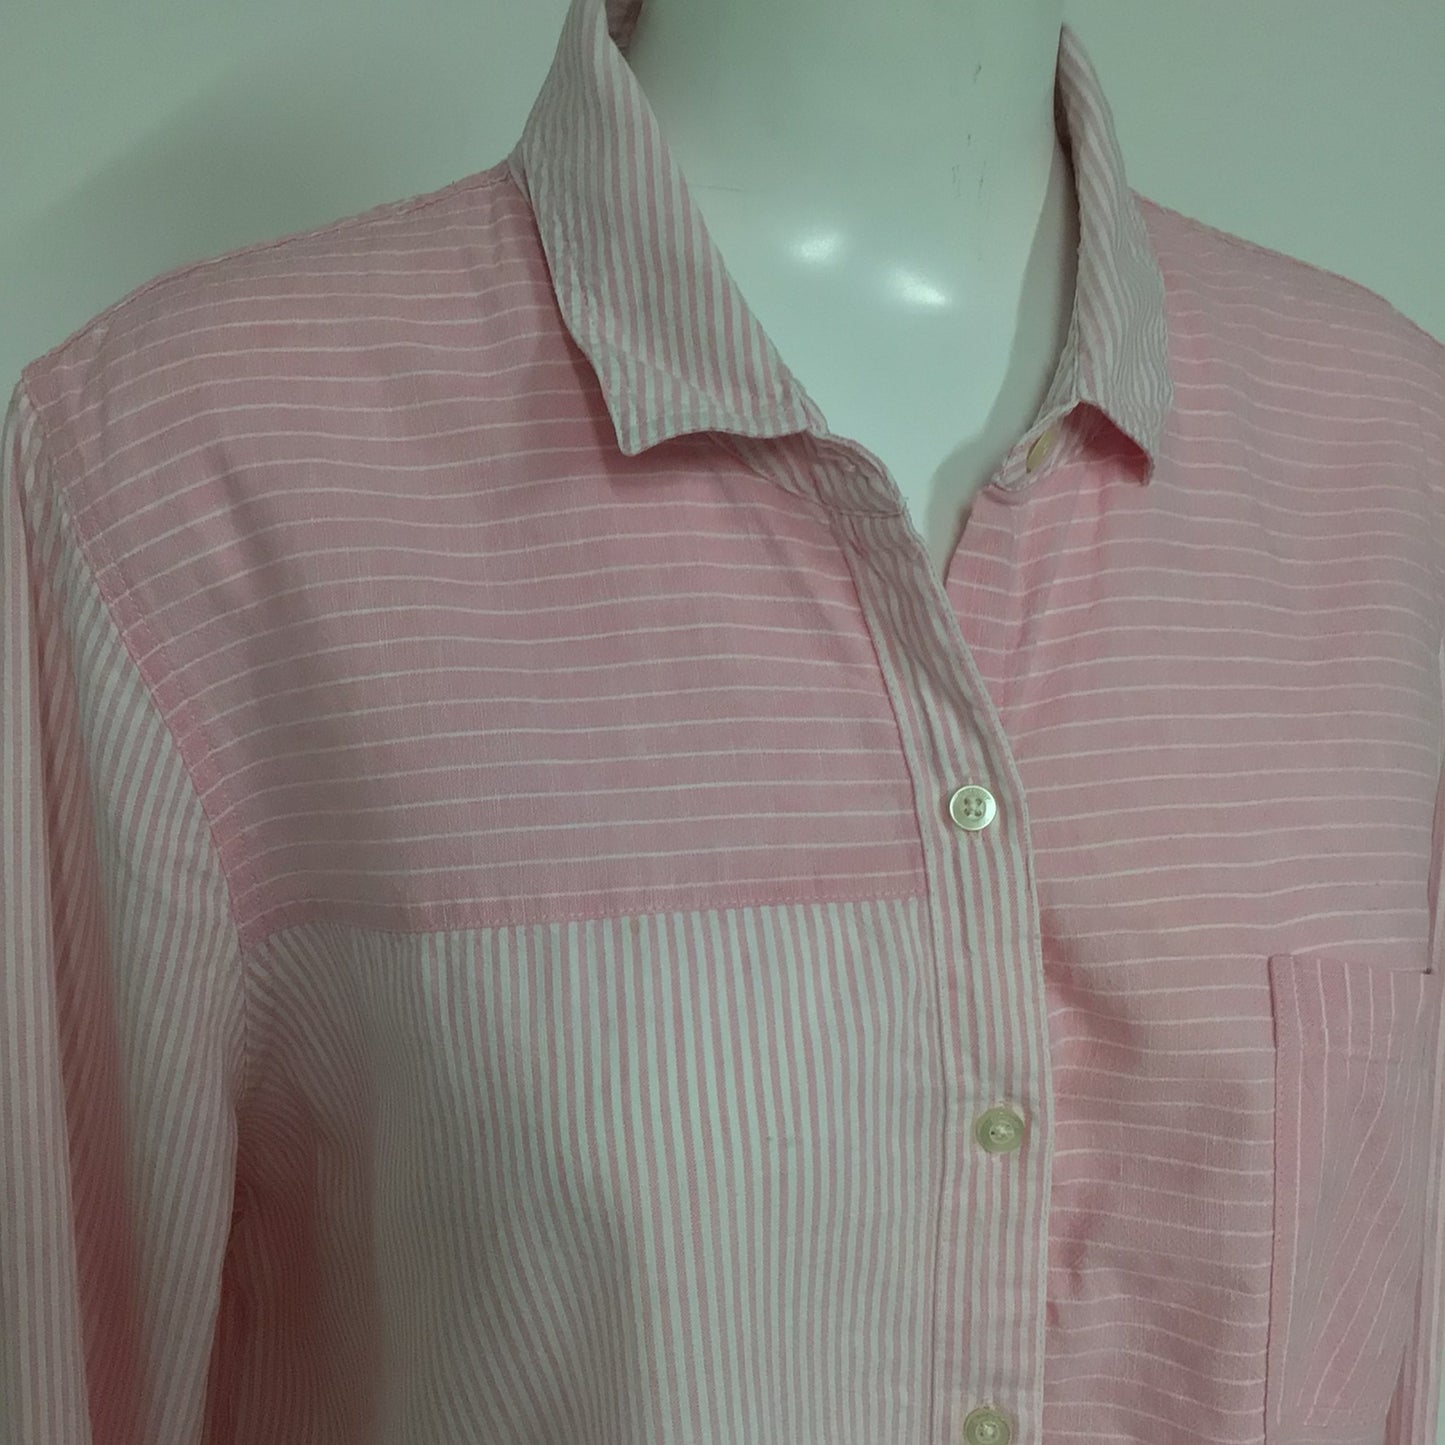 Barbour Pink Relaxed Striped Beachfront Shirt Cotton & Linen Blend Size 16